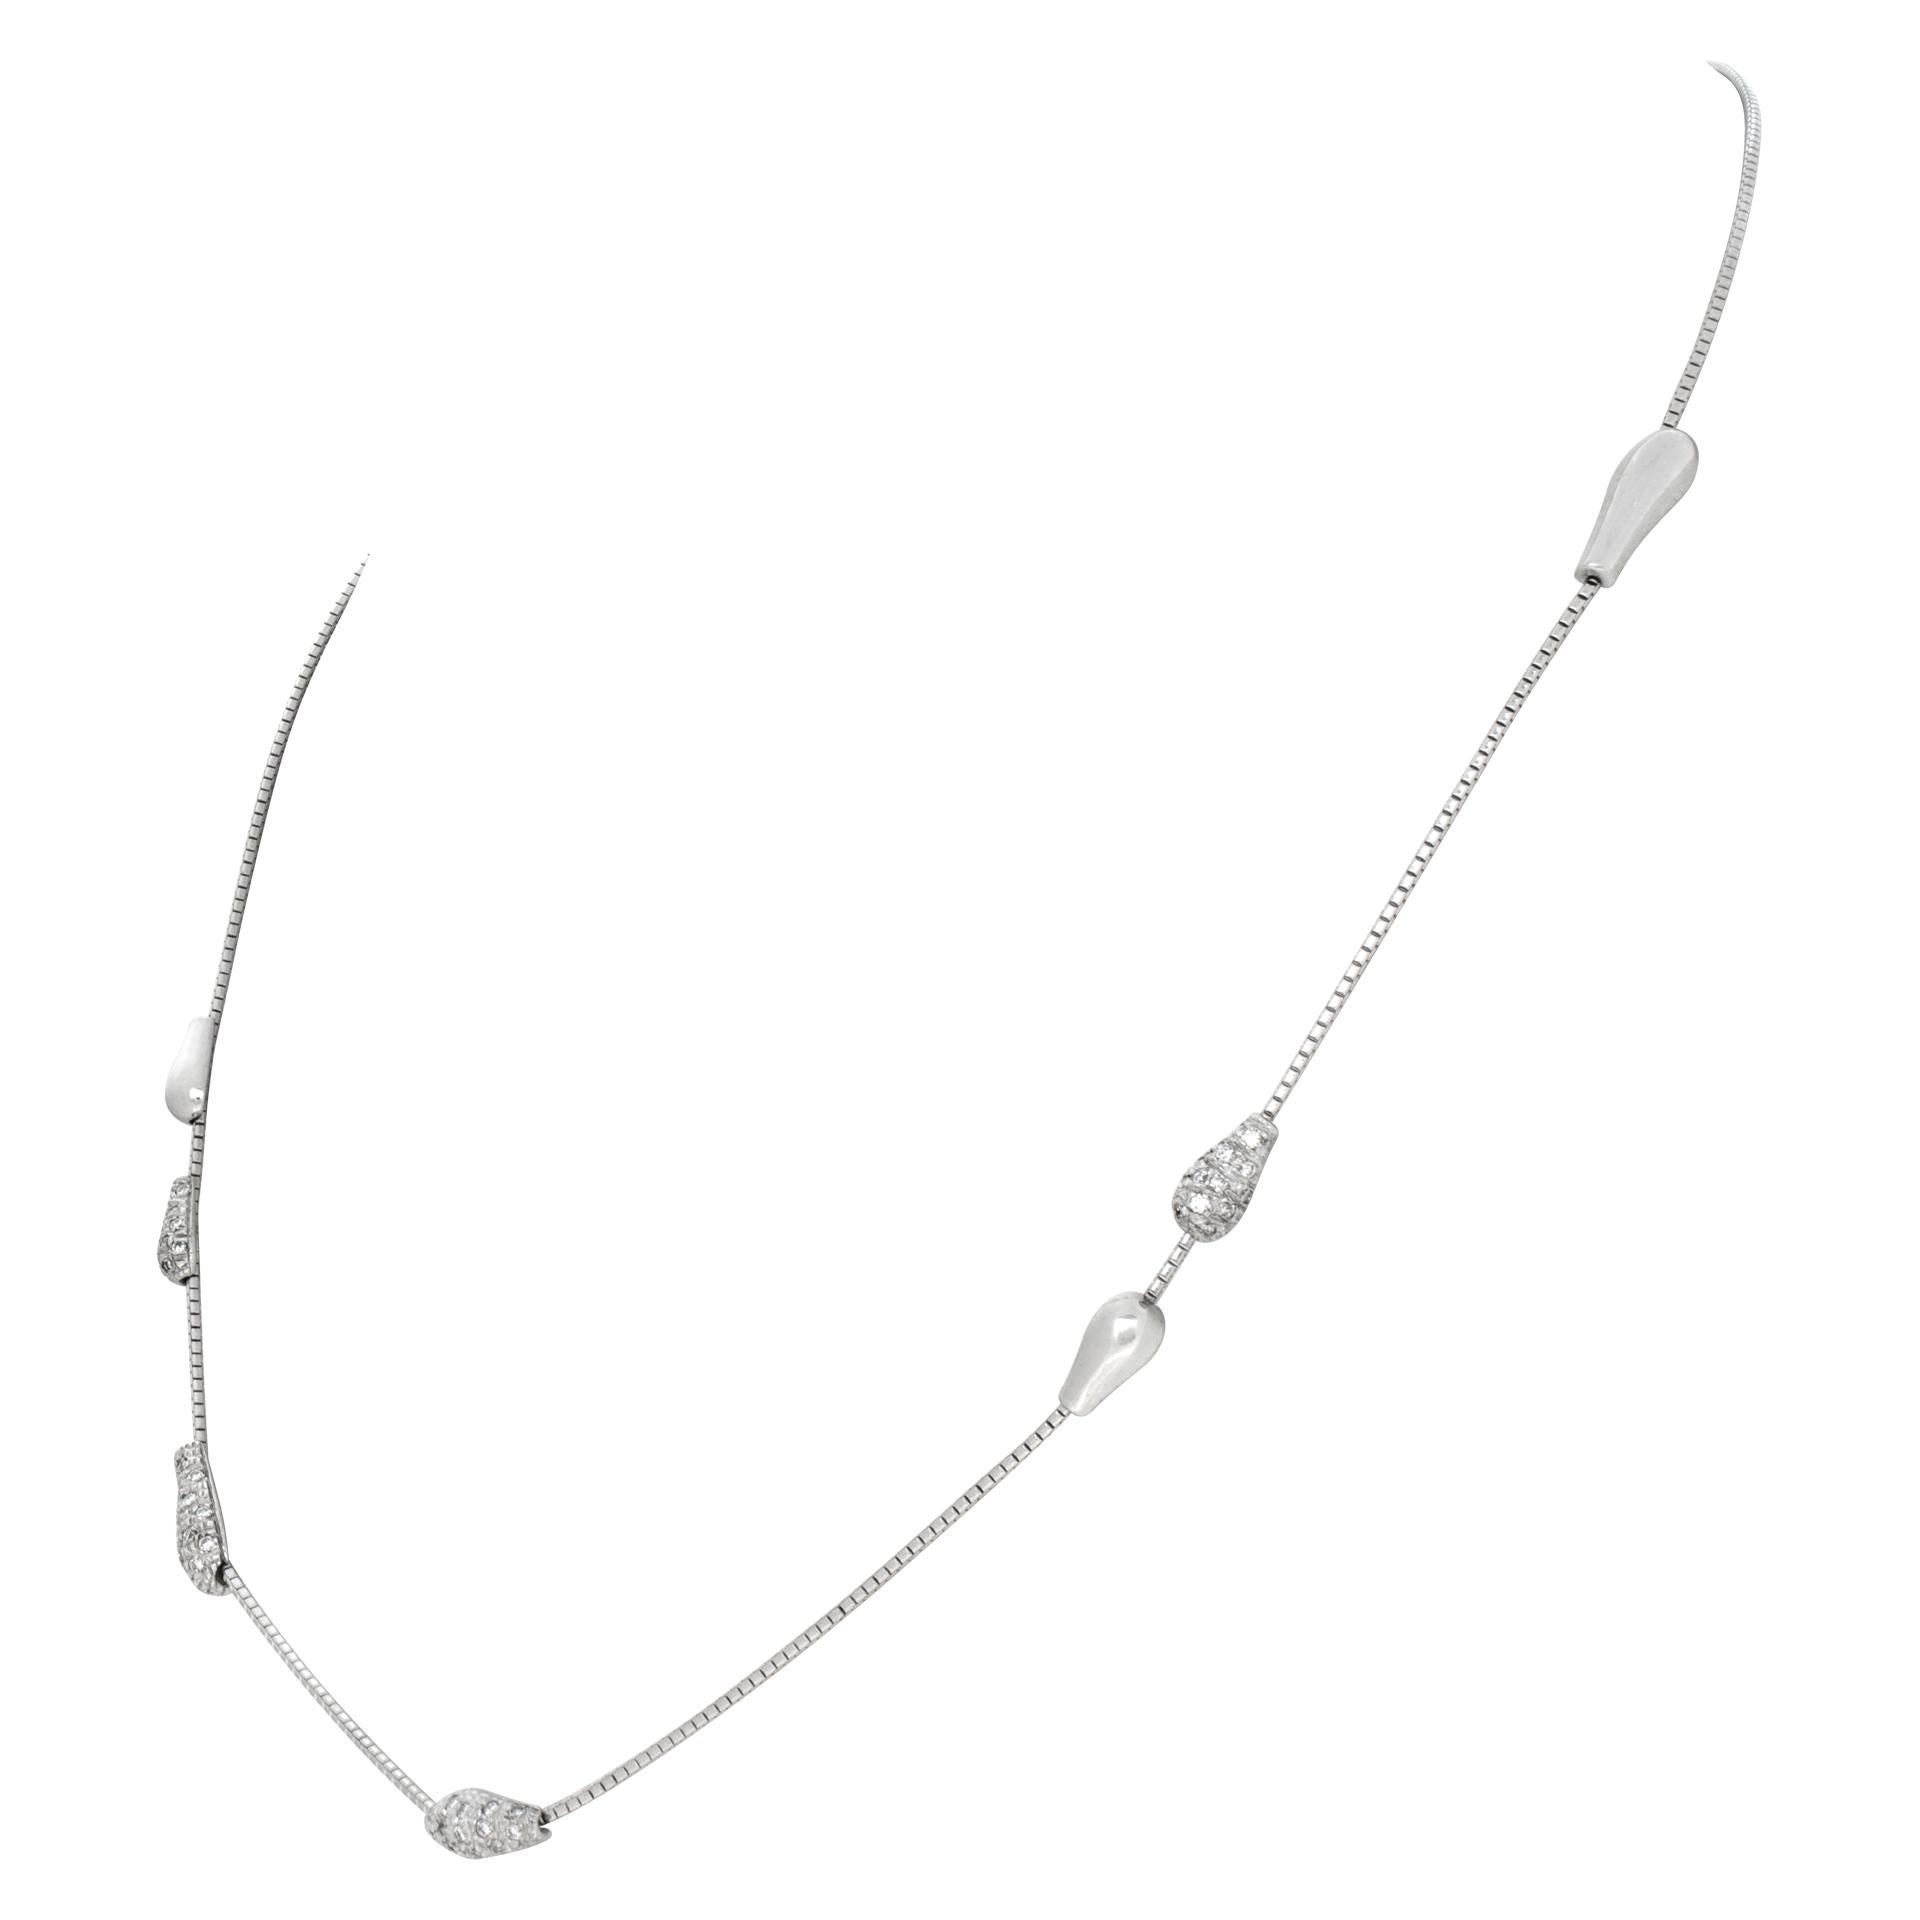 Designer Signed Henry Stern 18k White Gold Diamonds Necklace In Excellent Condition For Sale In Surfside, FL